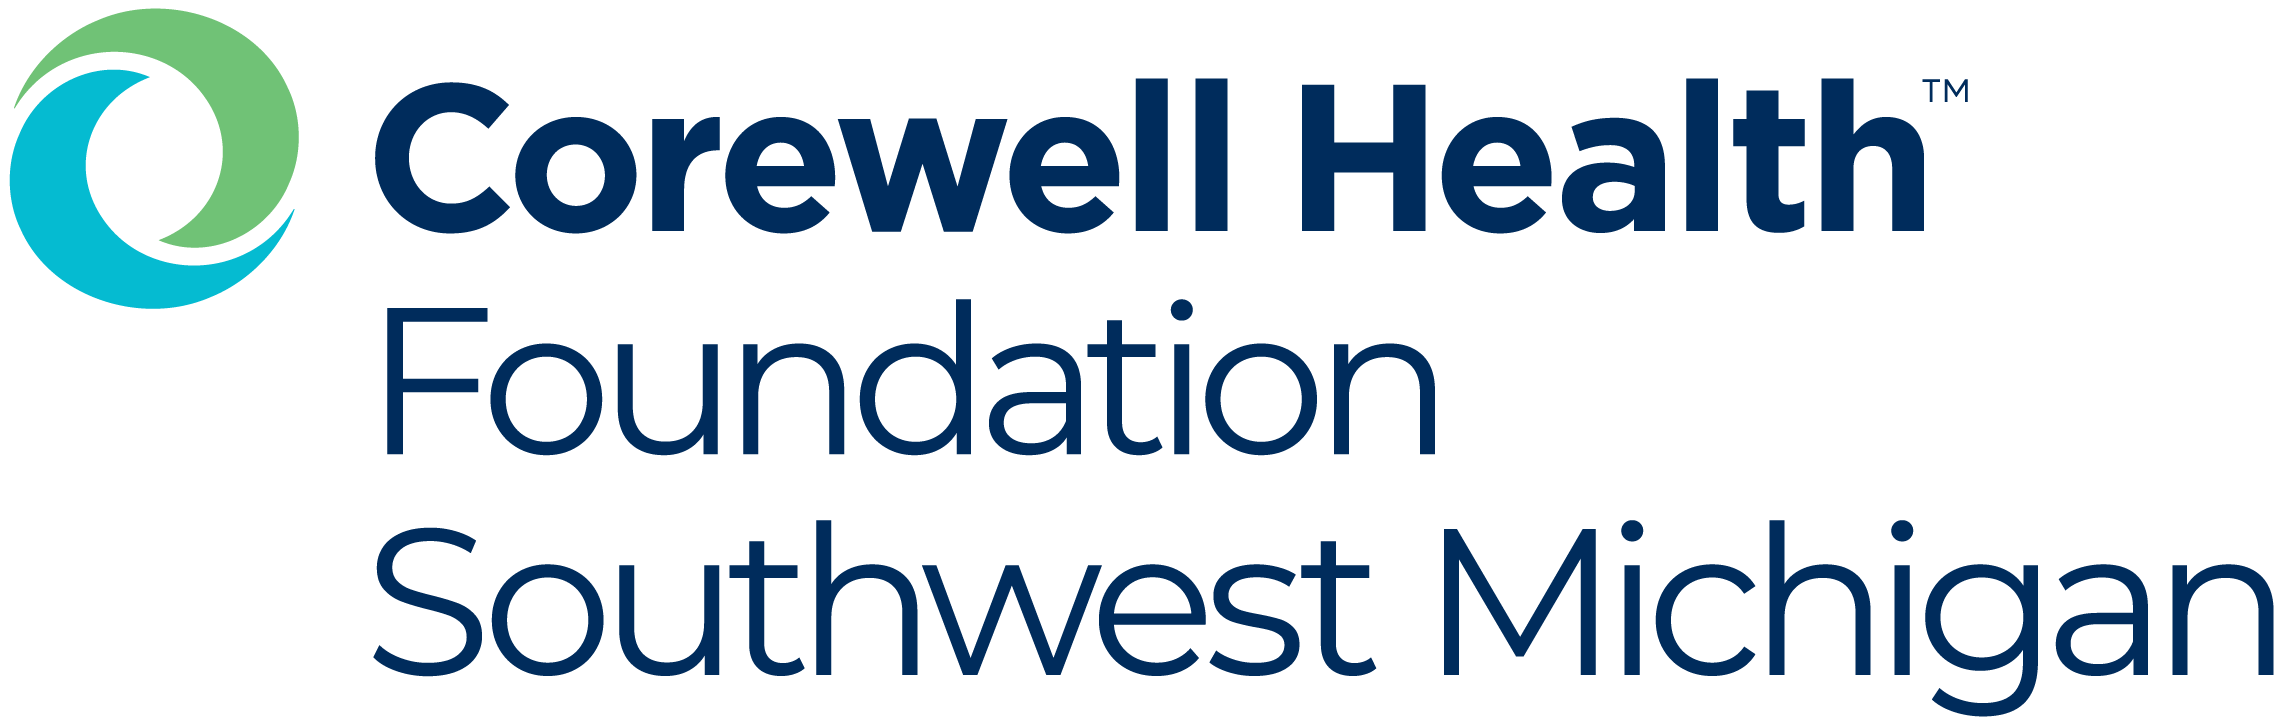 Corewell Health Foundation Southwest